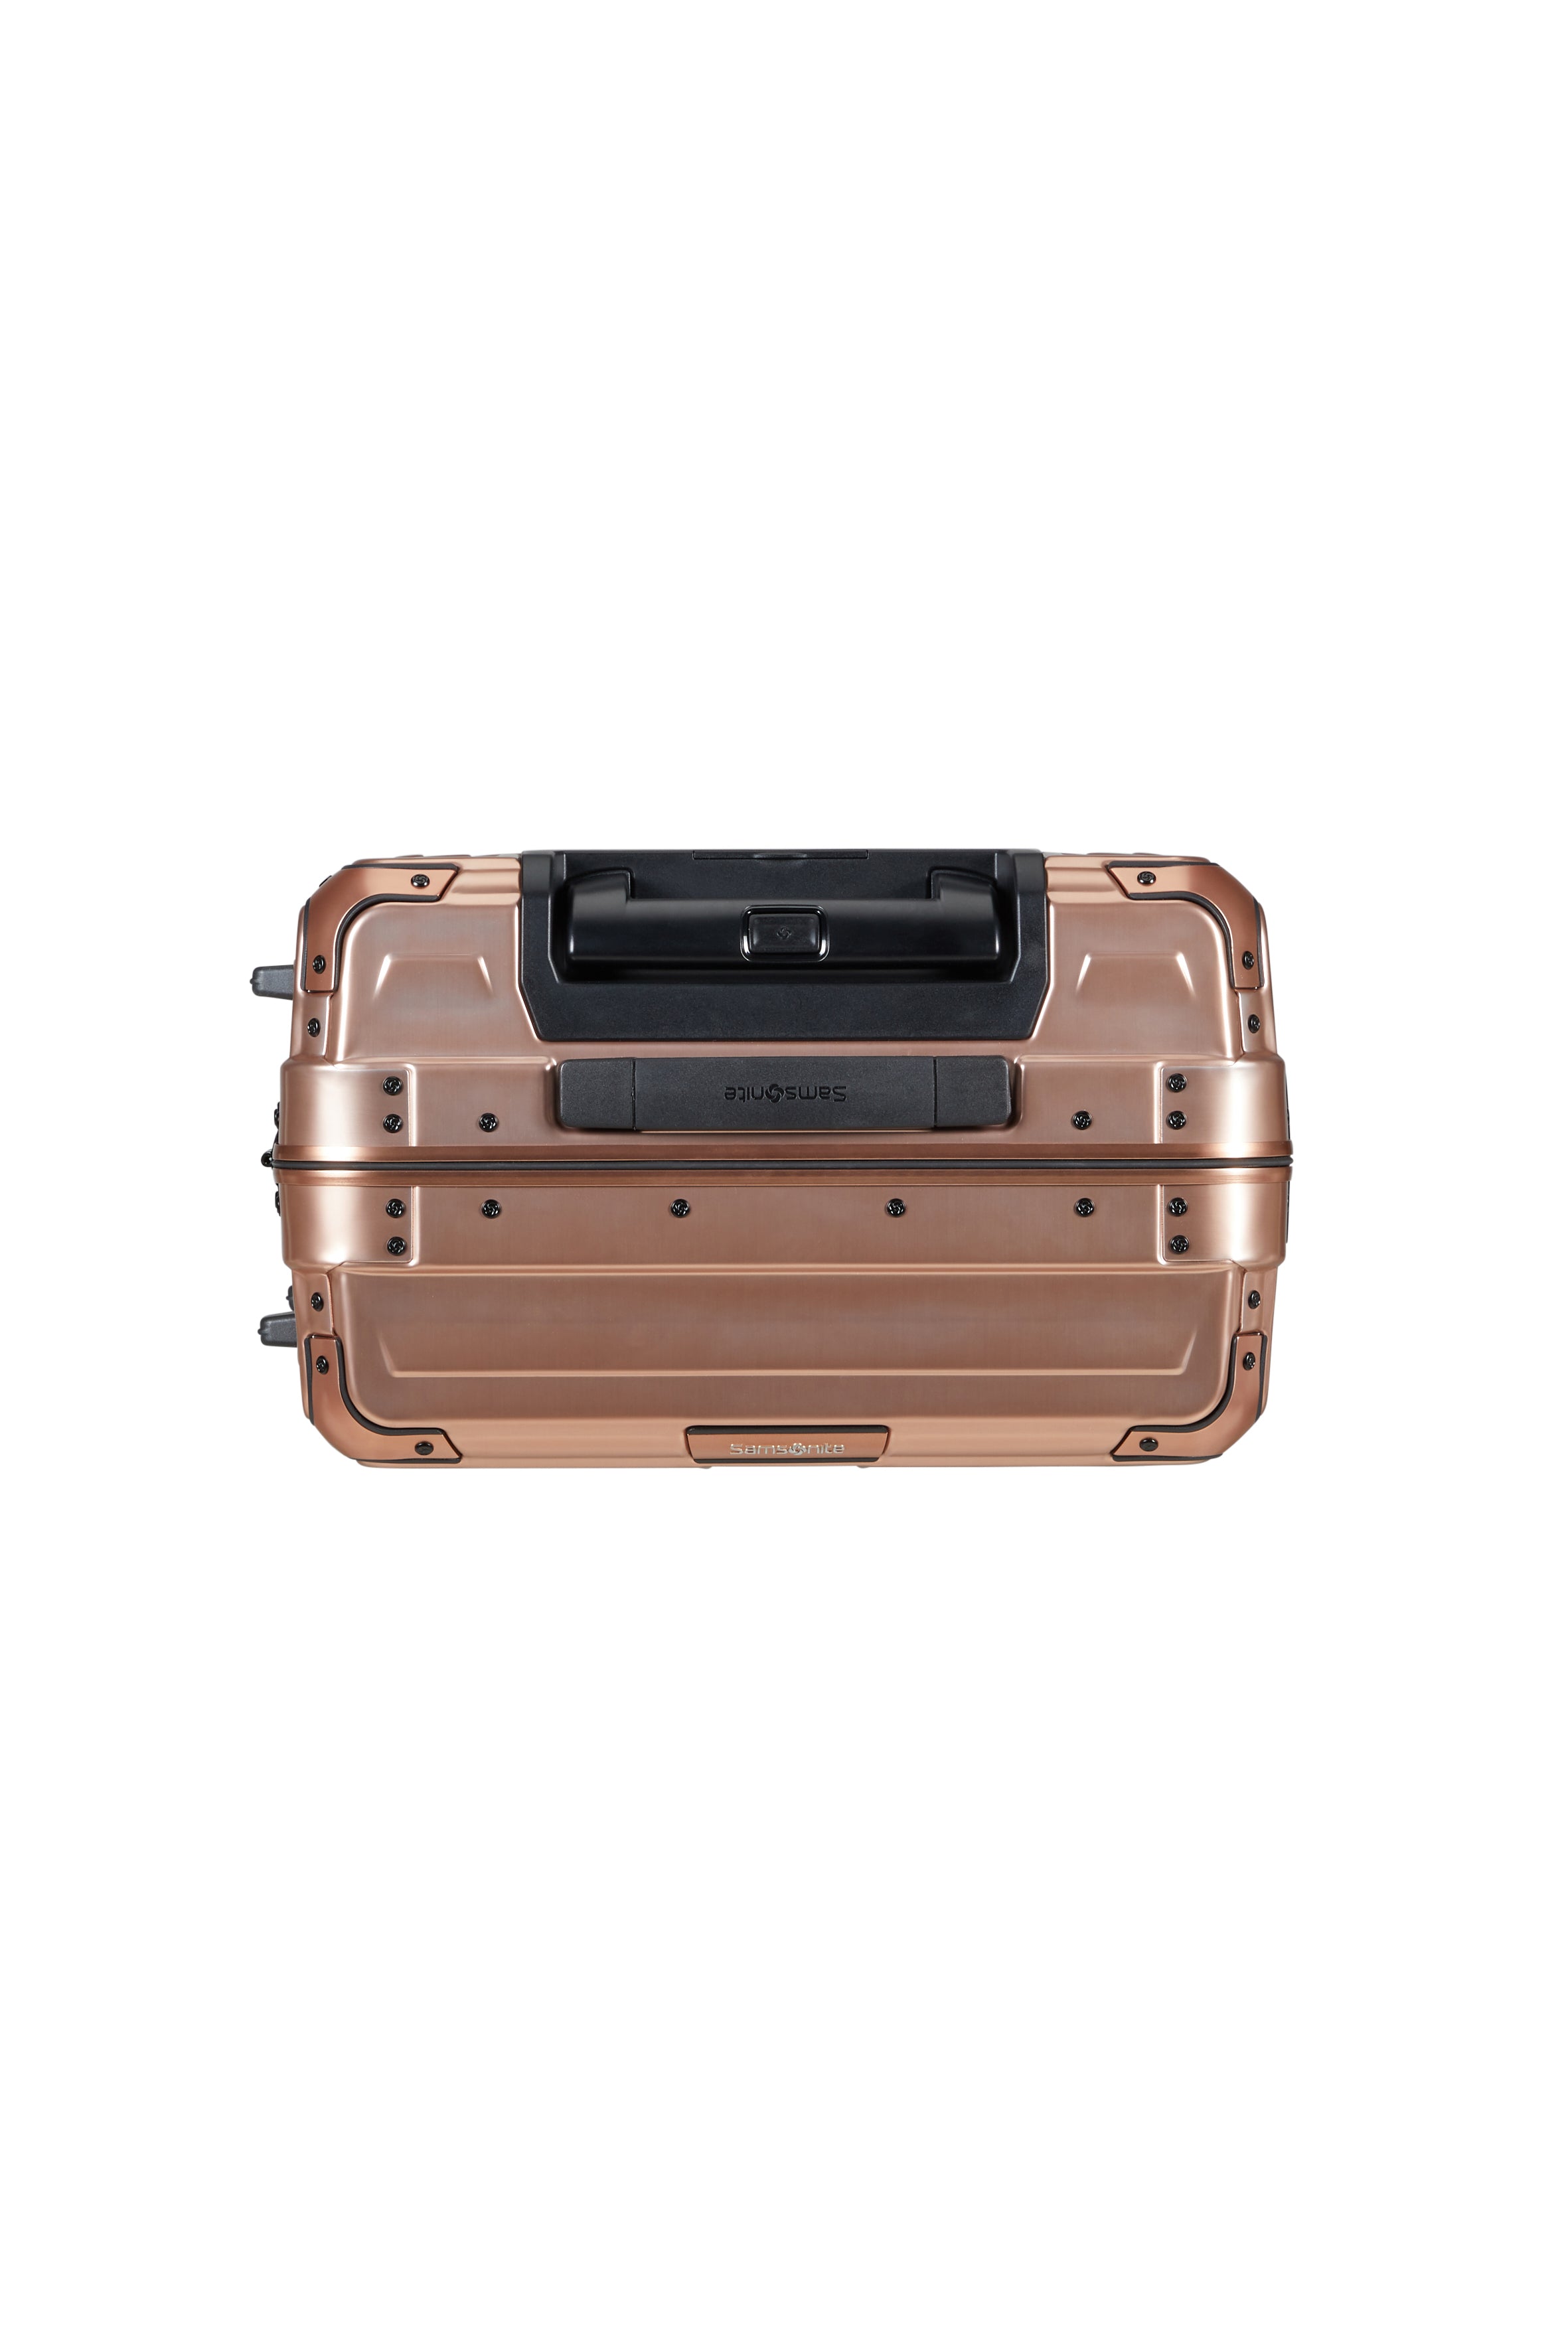 Samsonite - Lite Box ALU 55cm Small 4 Wheel Hard Suitcase - Gradient Copper-4